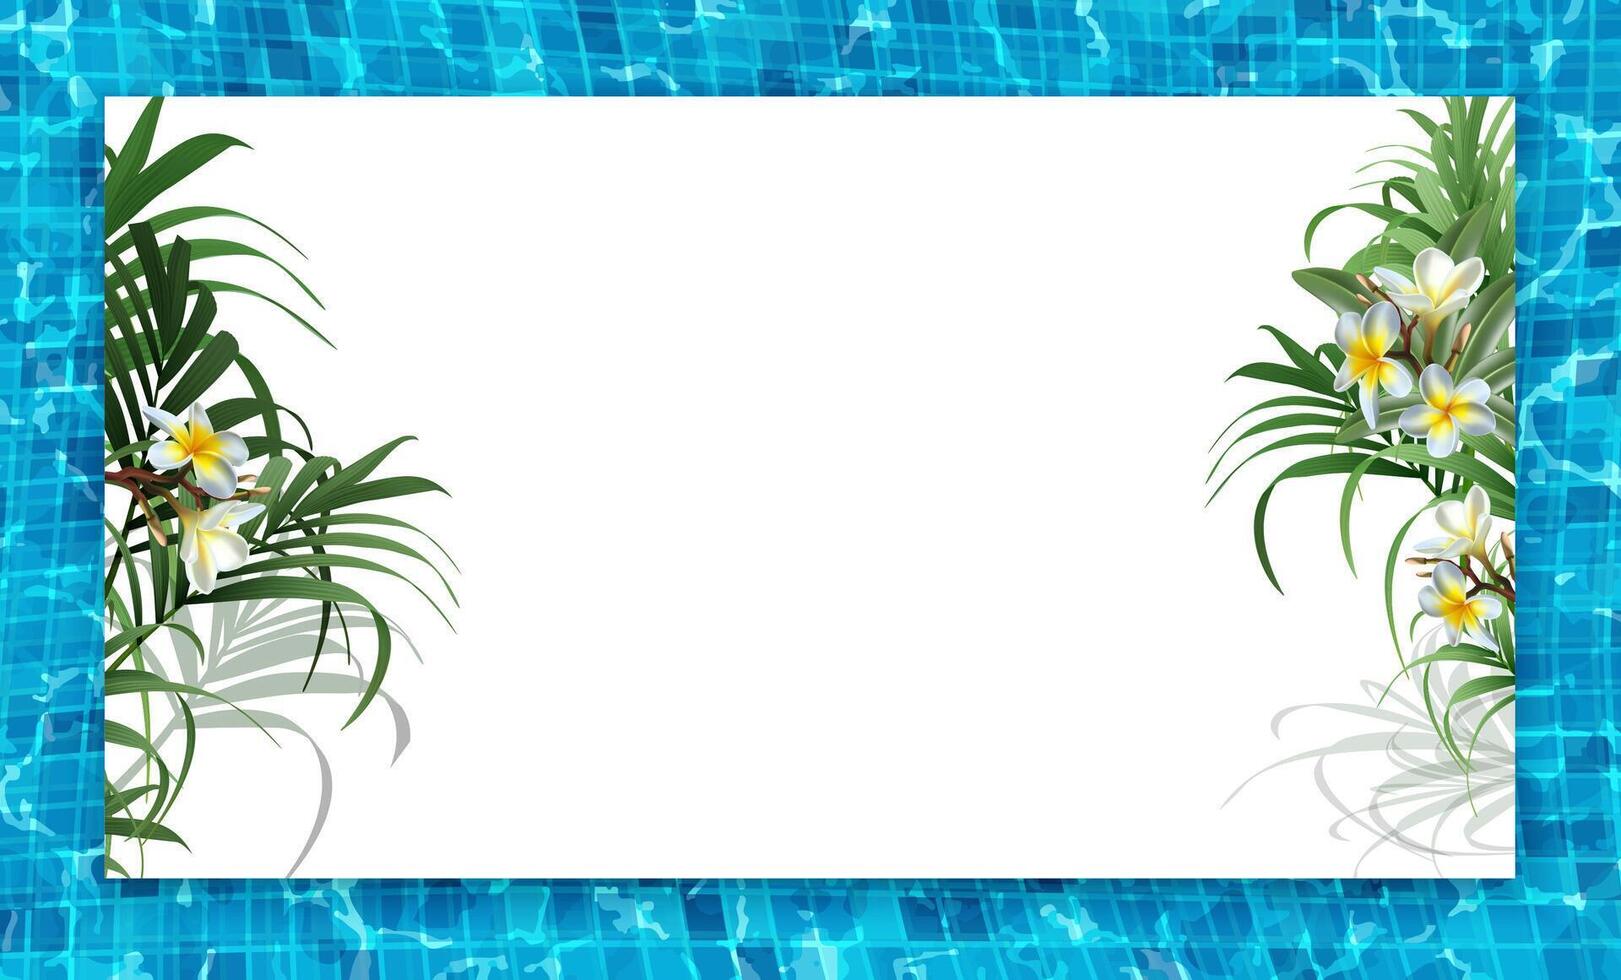 3d realista vector ilustración. piscina fiesta bandera con frangipani flores marco.